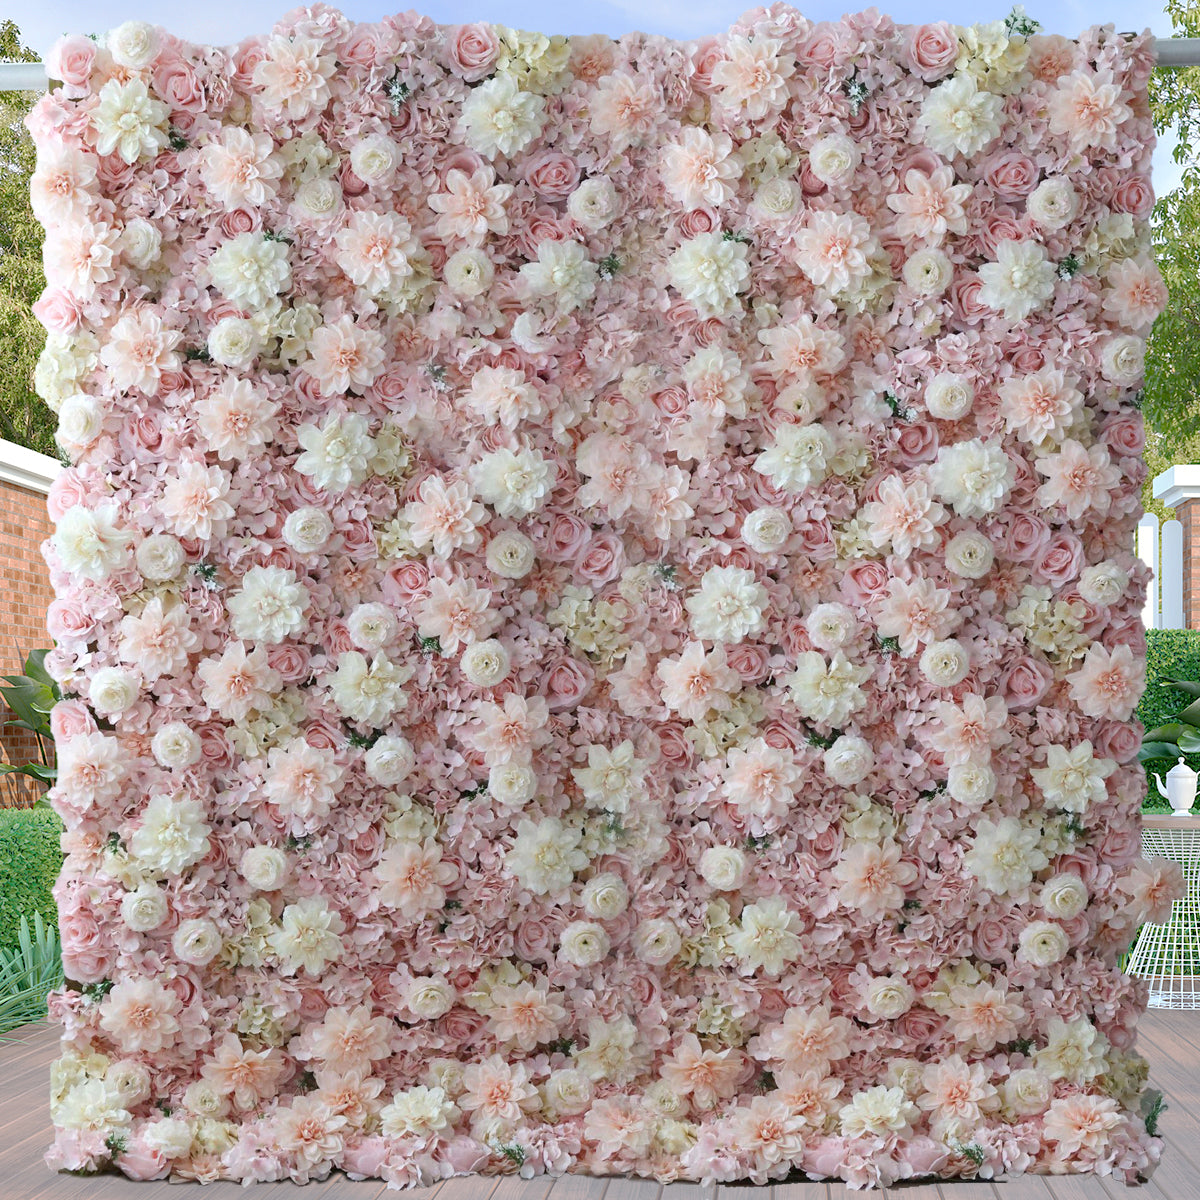 3D Artificial Flower Wall Arrangement Wedding Party Birthday Backdrop Decor HQ1332